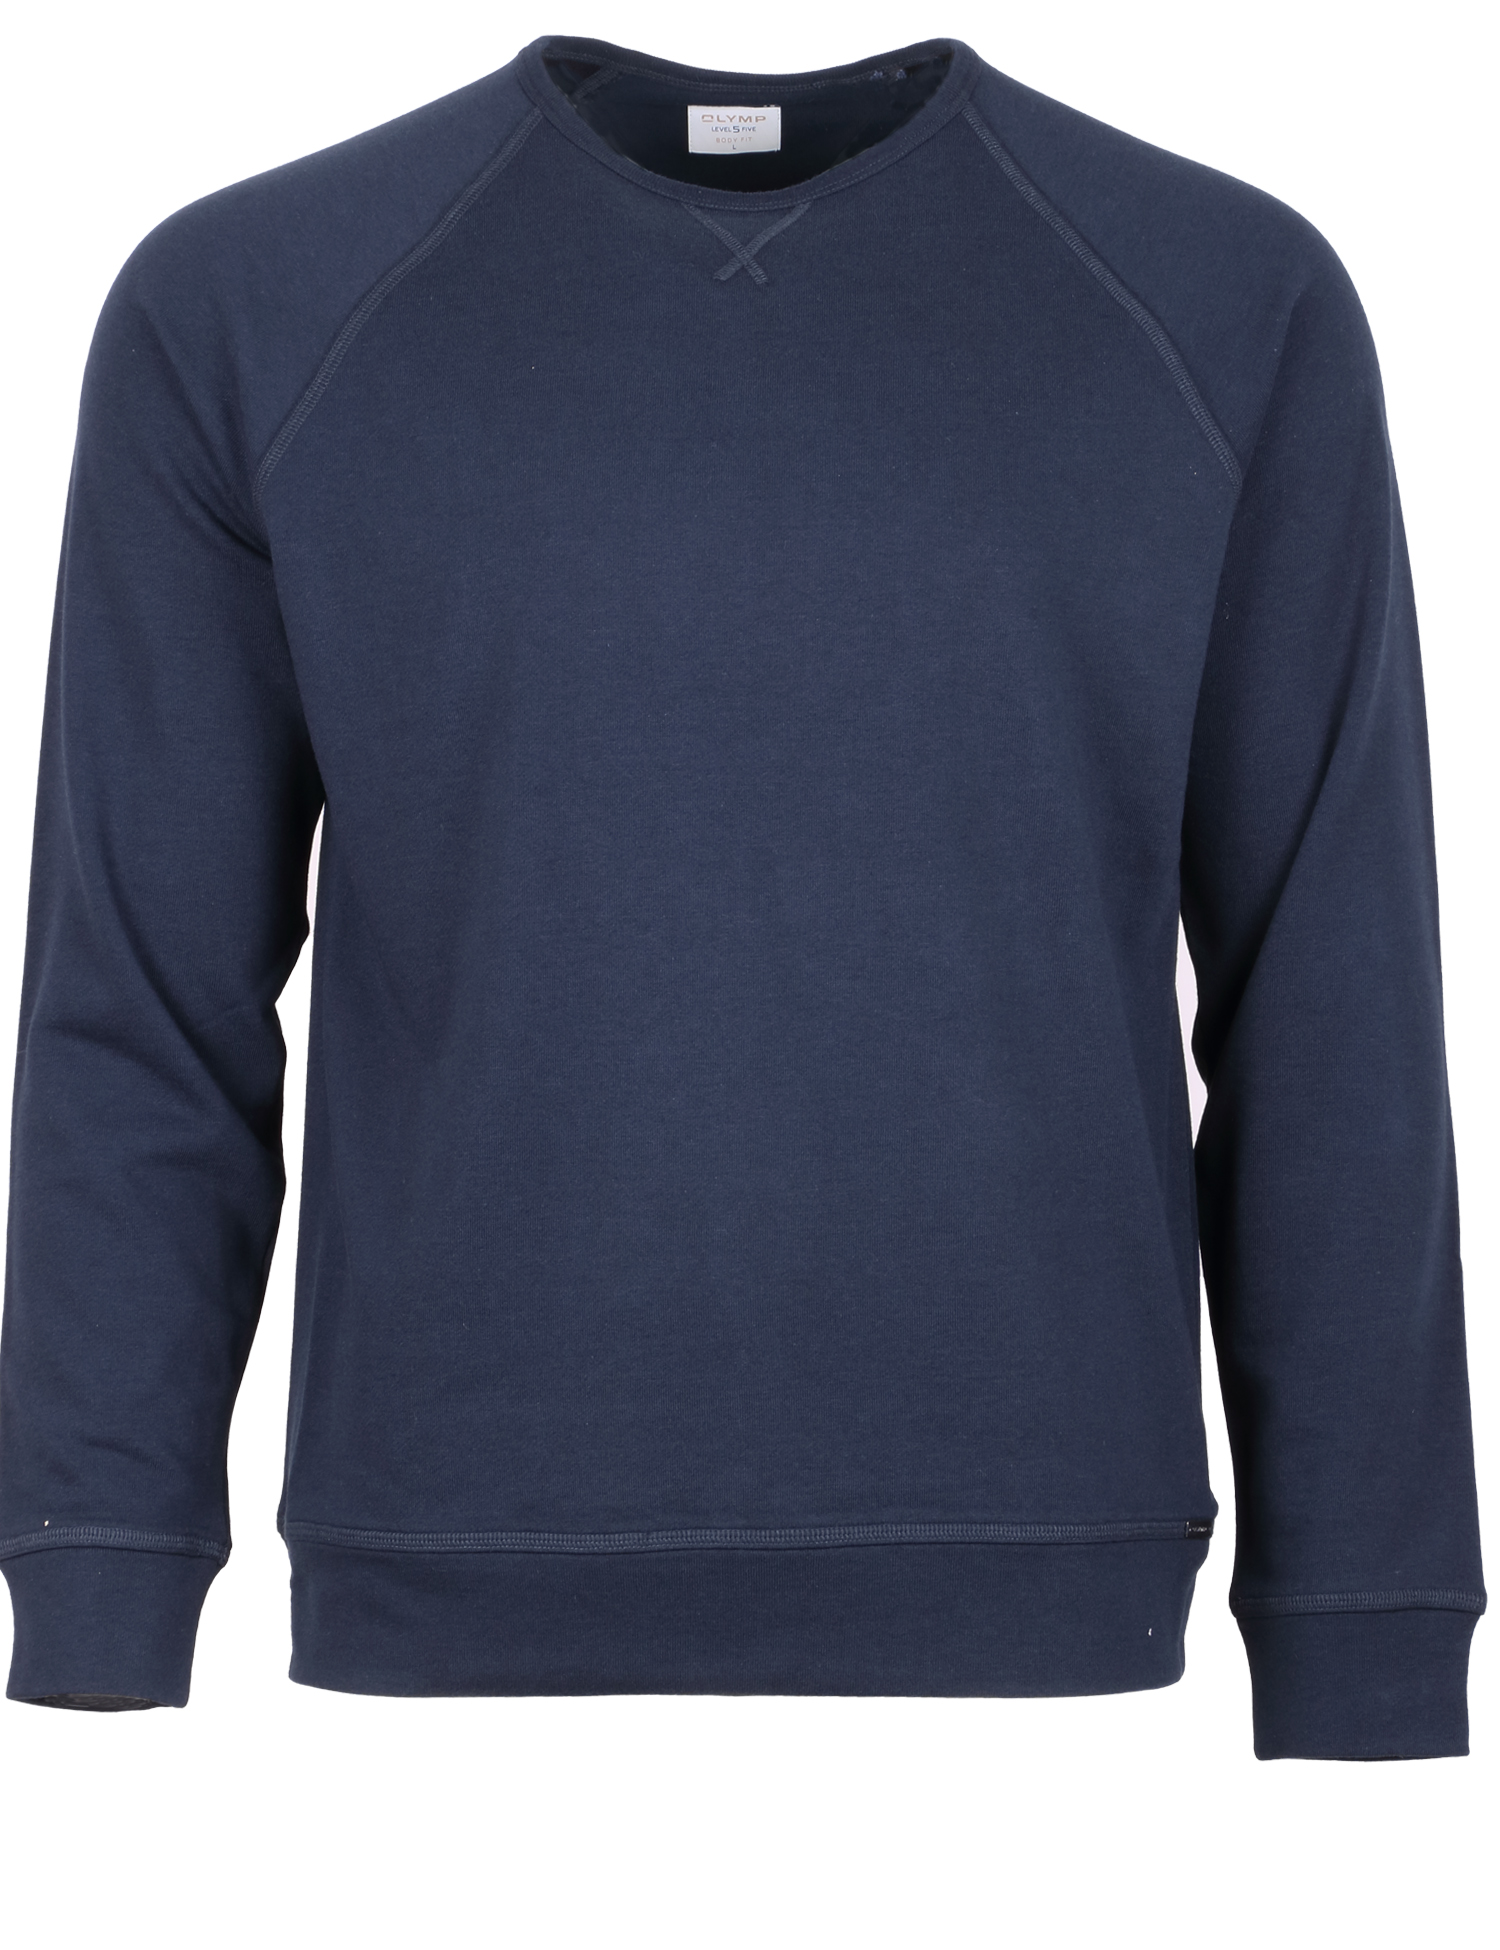 Olymp Level 5 Sweatshirt - dunkelblau L